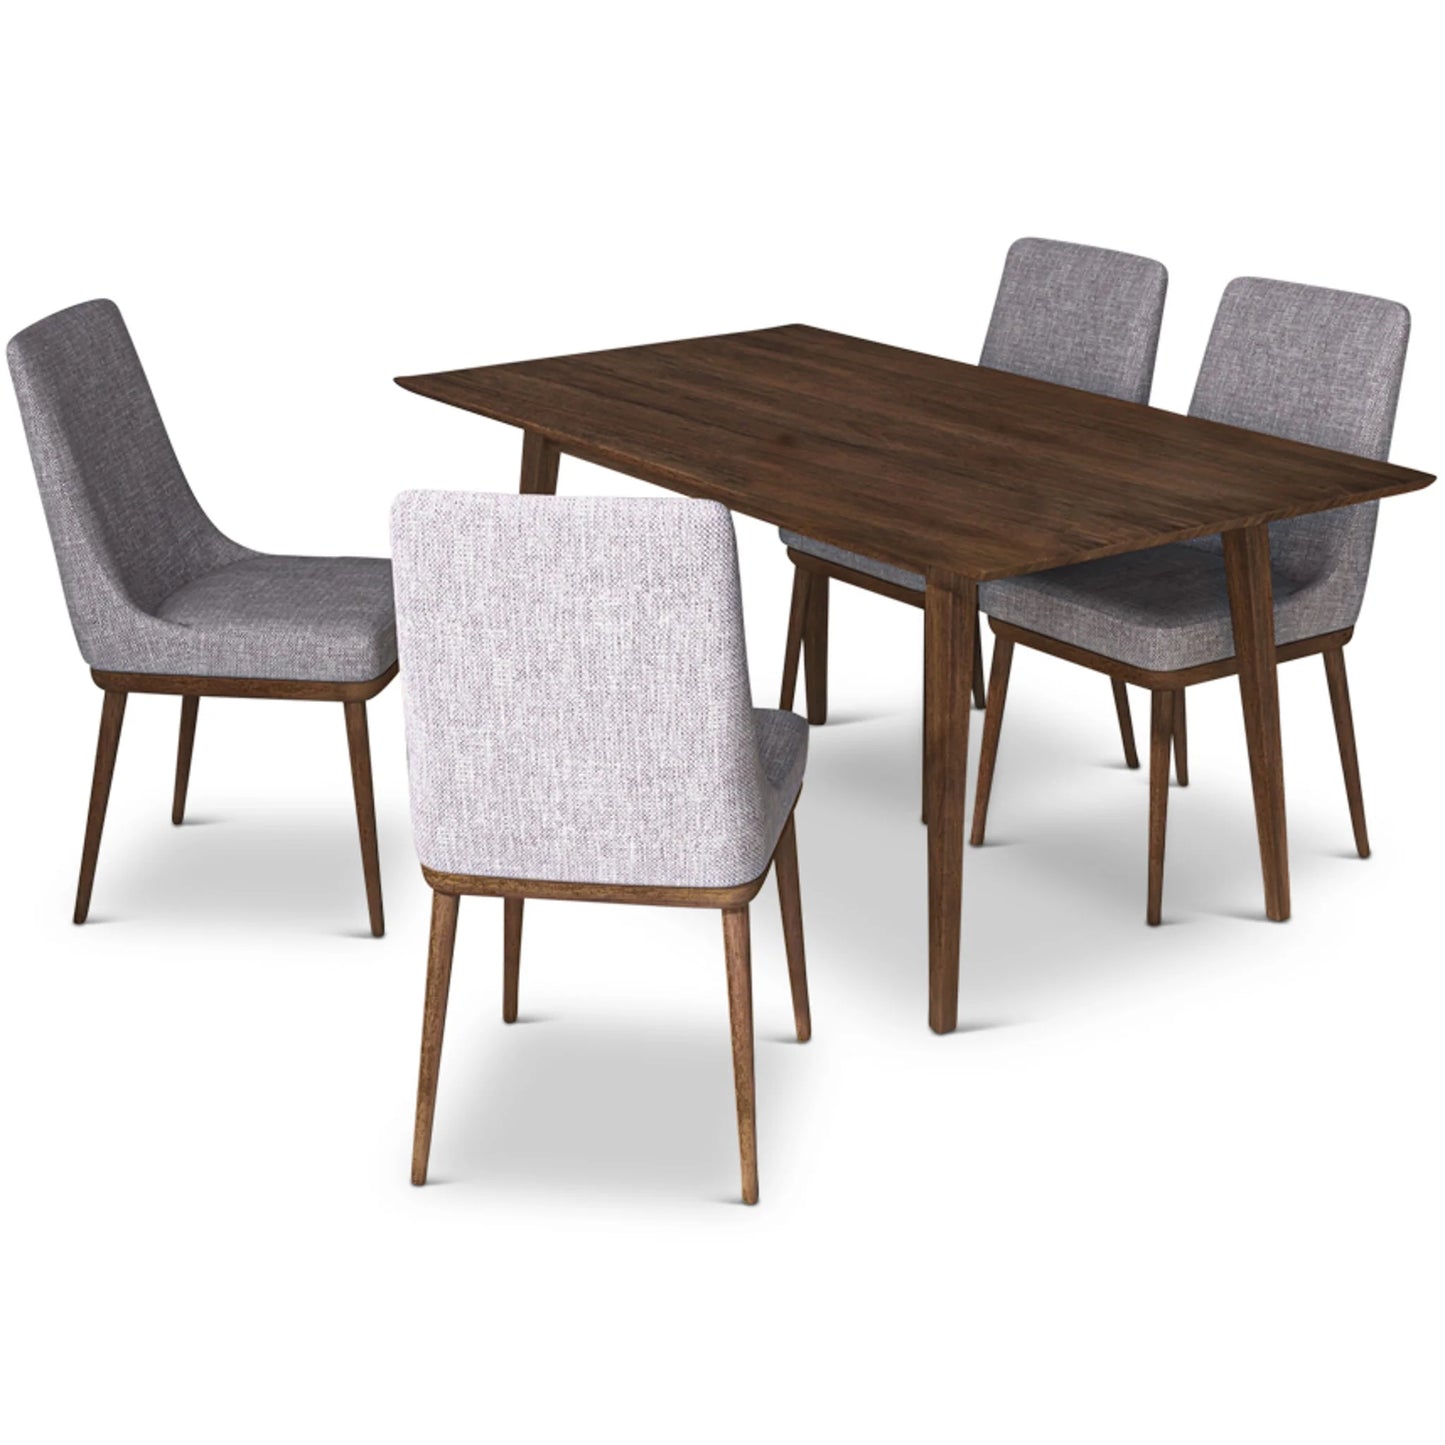 Adira (Small - Walnut) Dining Set with 4 Brighton (Grey) Dining Chairs